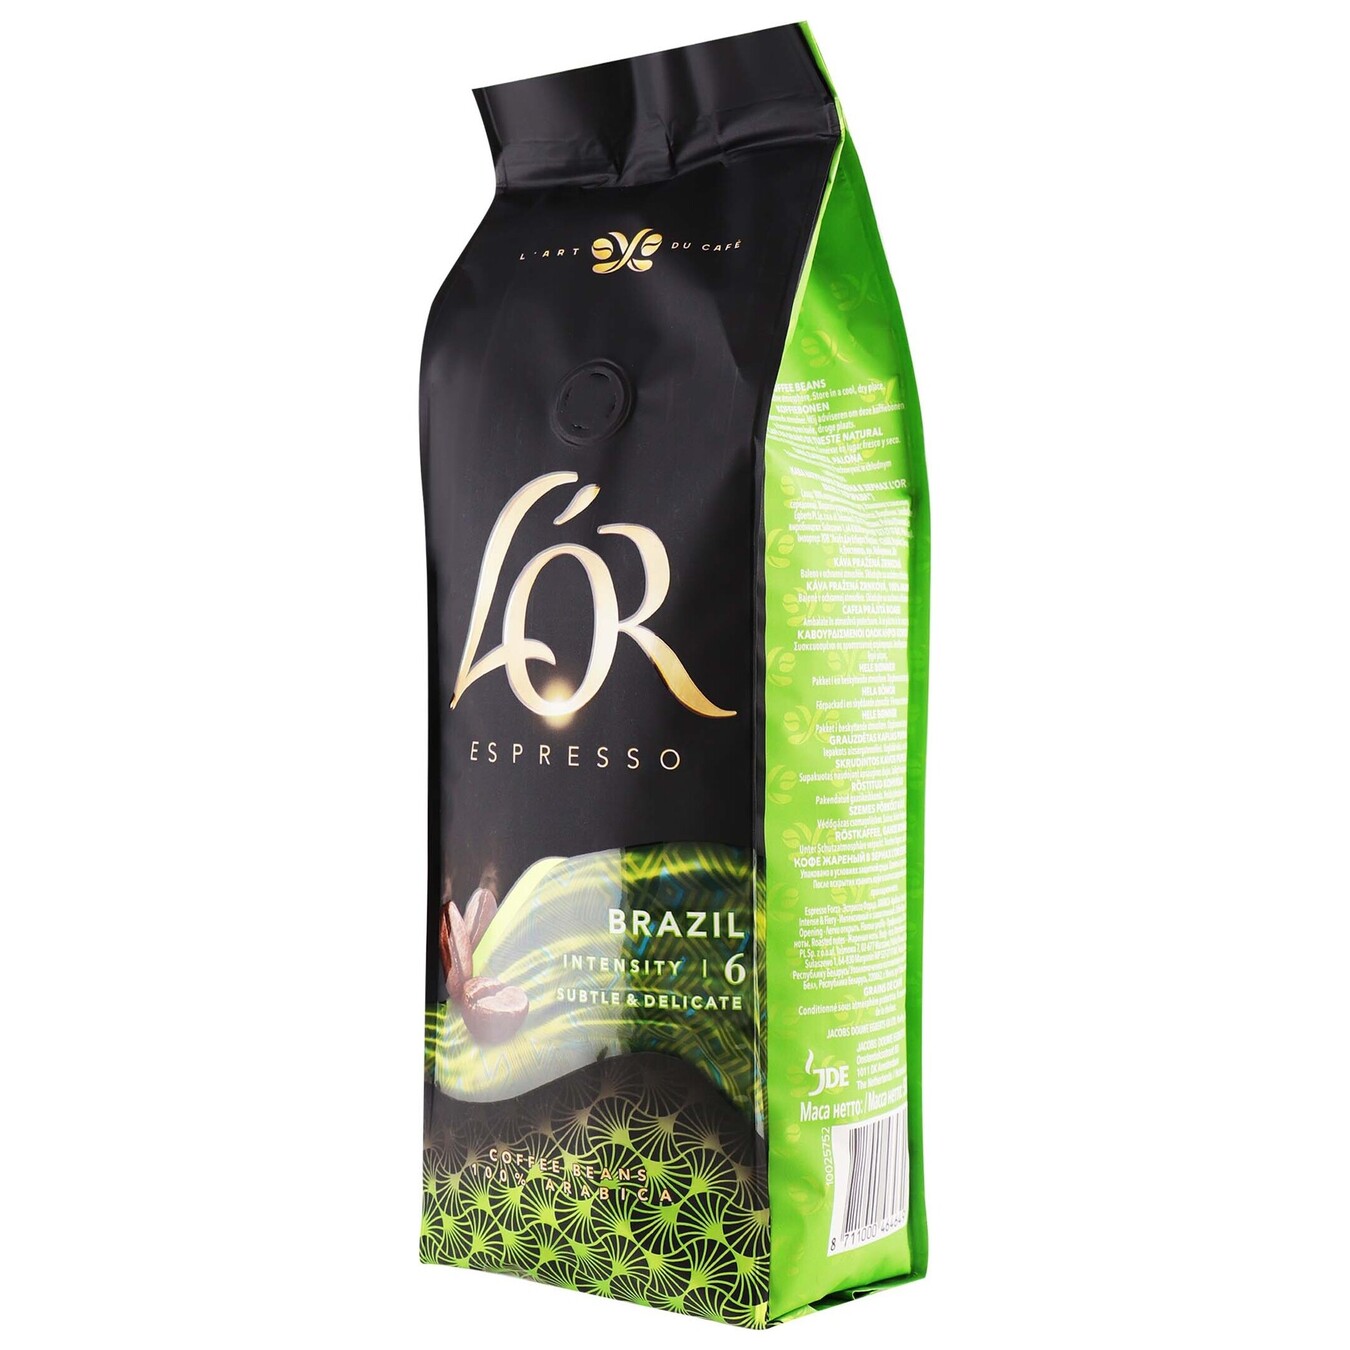 L'or Espresso Brazil Coffee Beans 500g 2